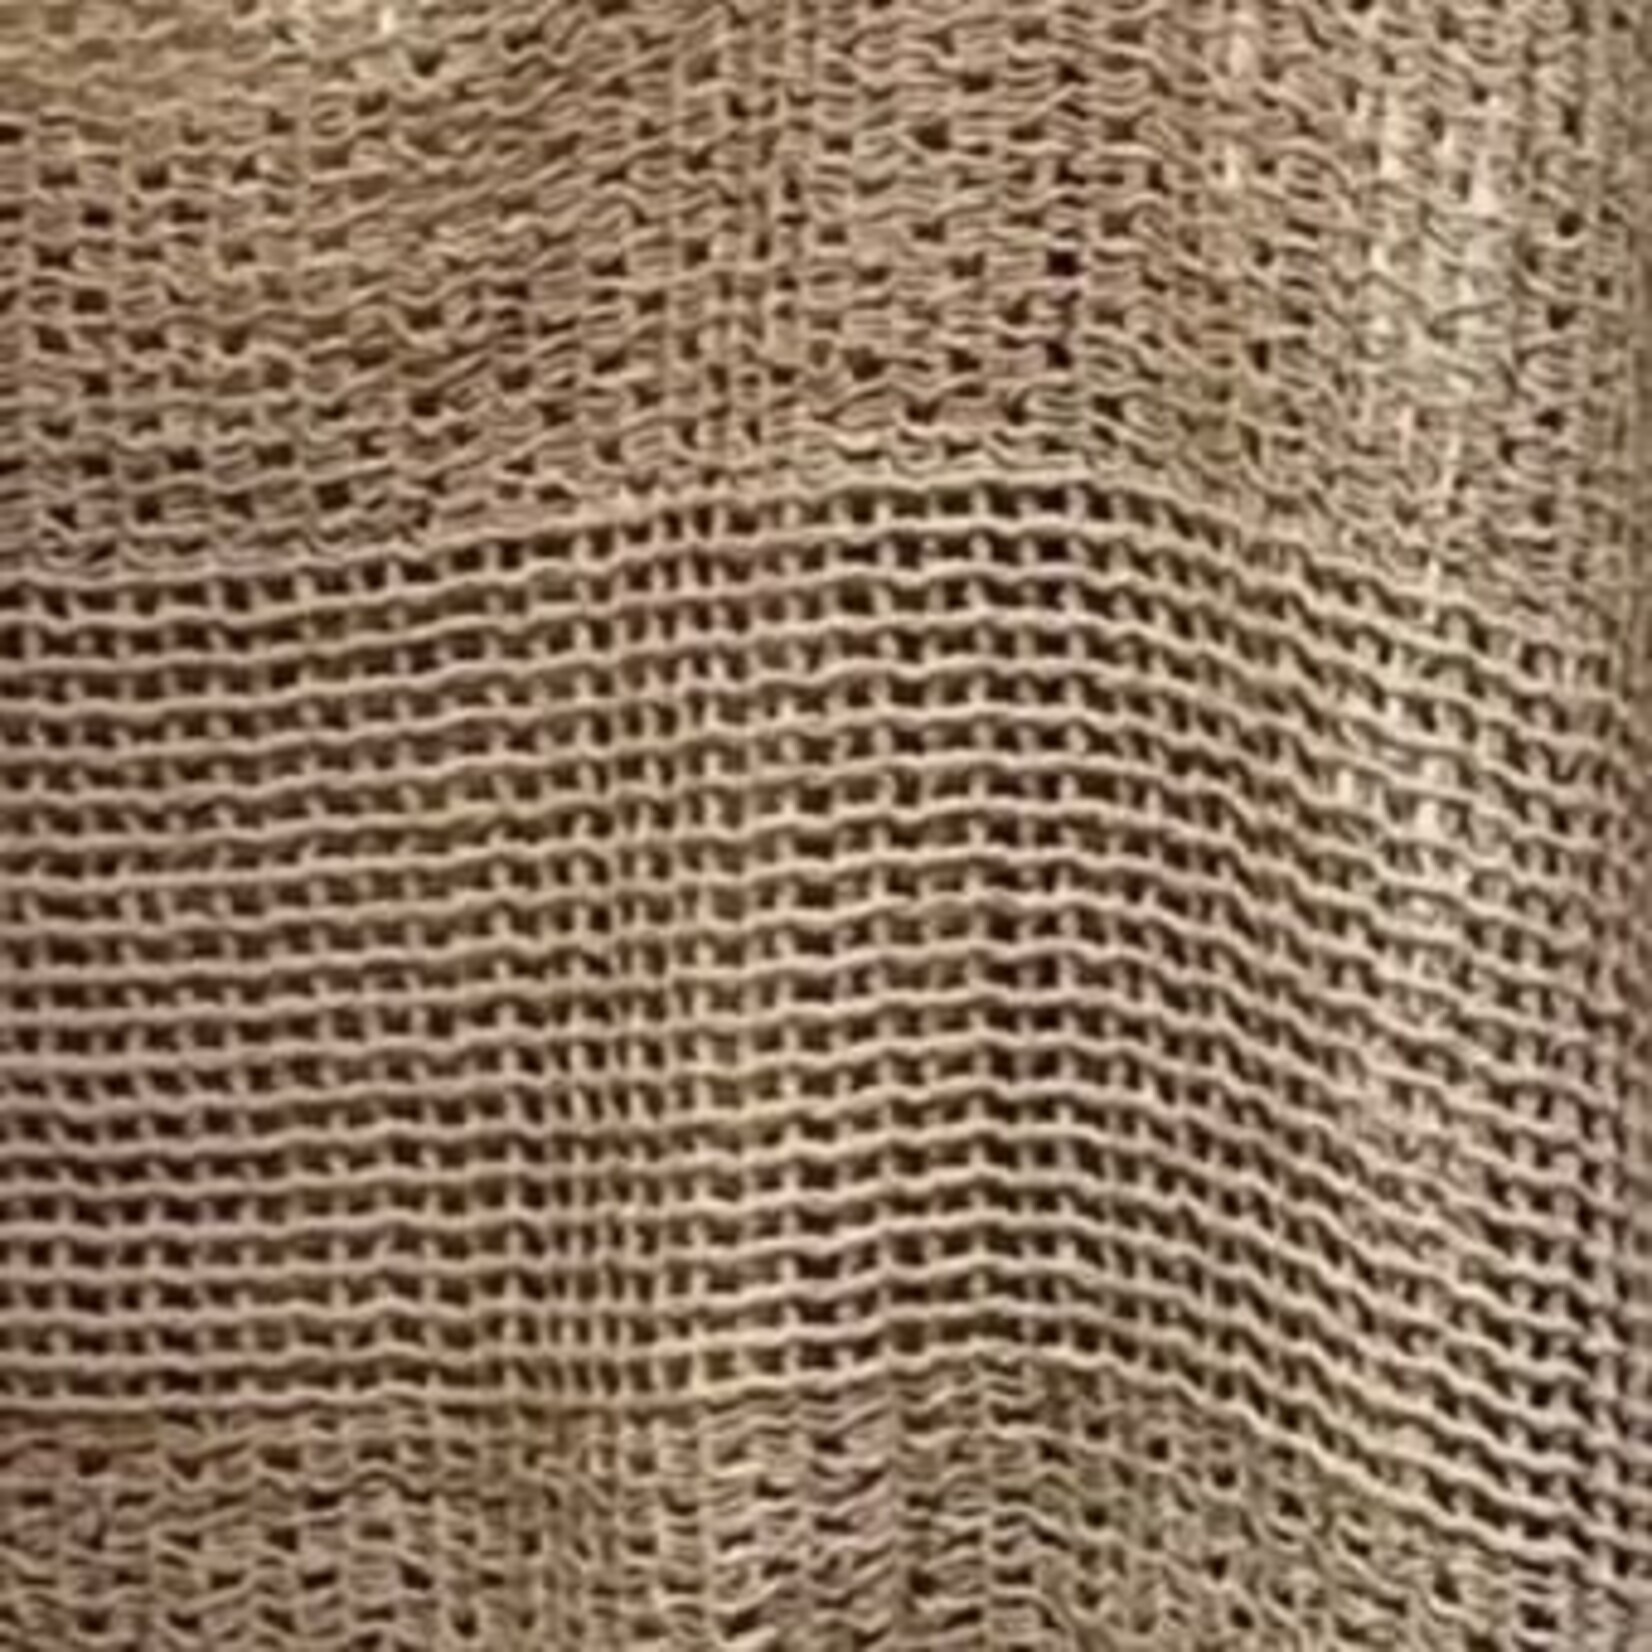 Milio Milano Crochet Dolman Sleeve Crop Top W/ Fringe Detail At Hem And Neckline